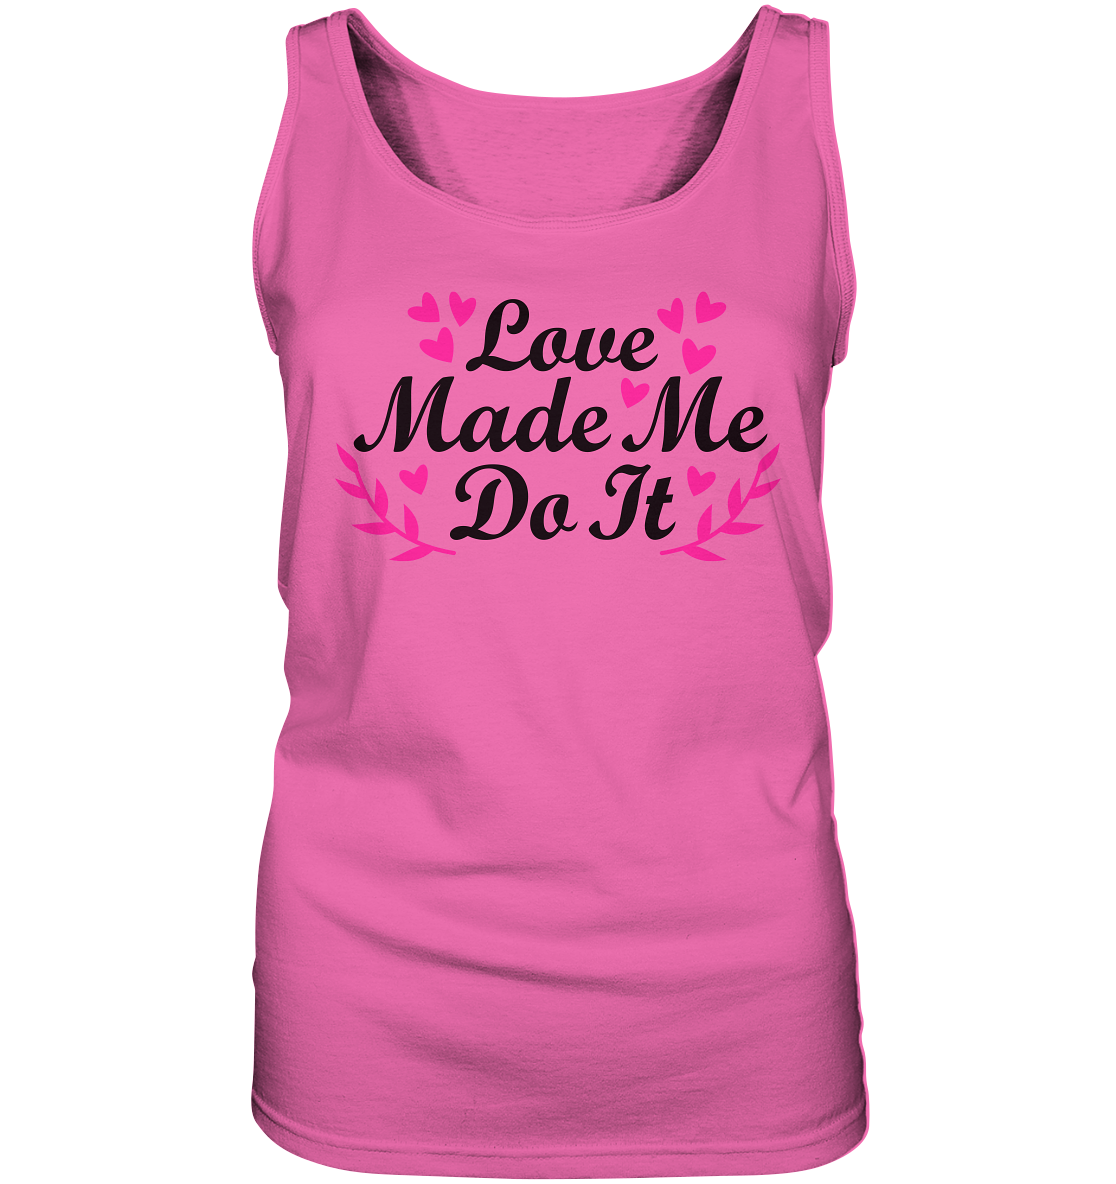 Love made me do it - ladies tank top